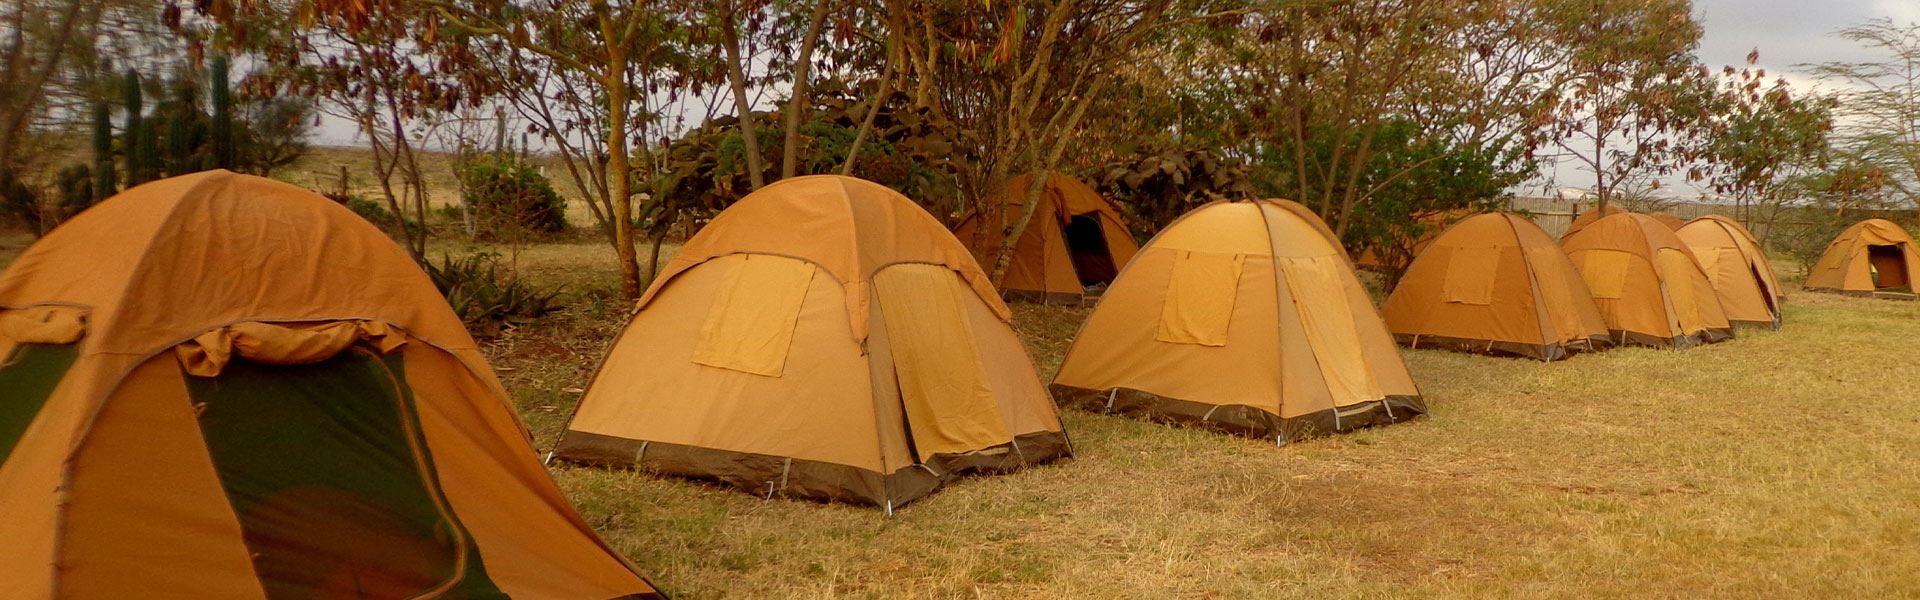 twiga Lodge and campsite